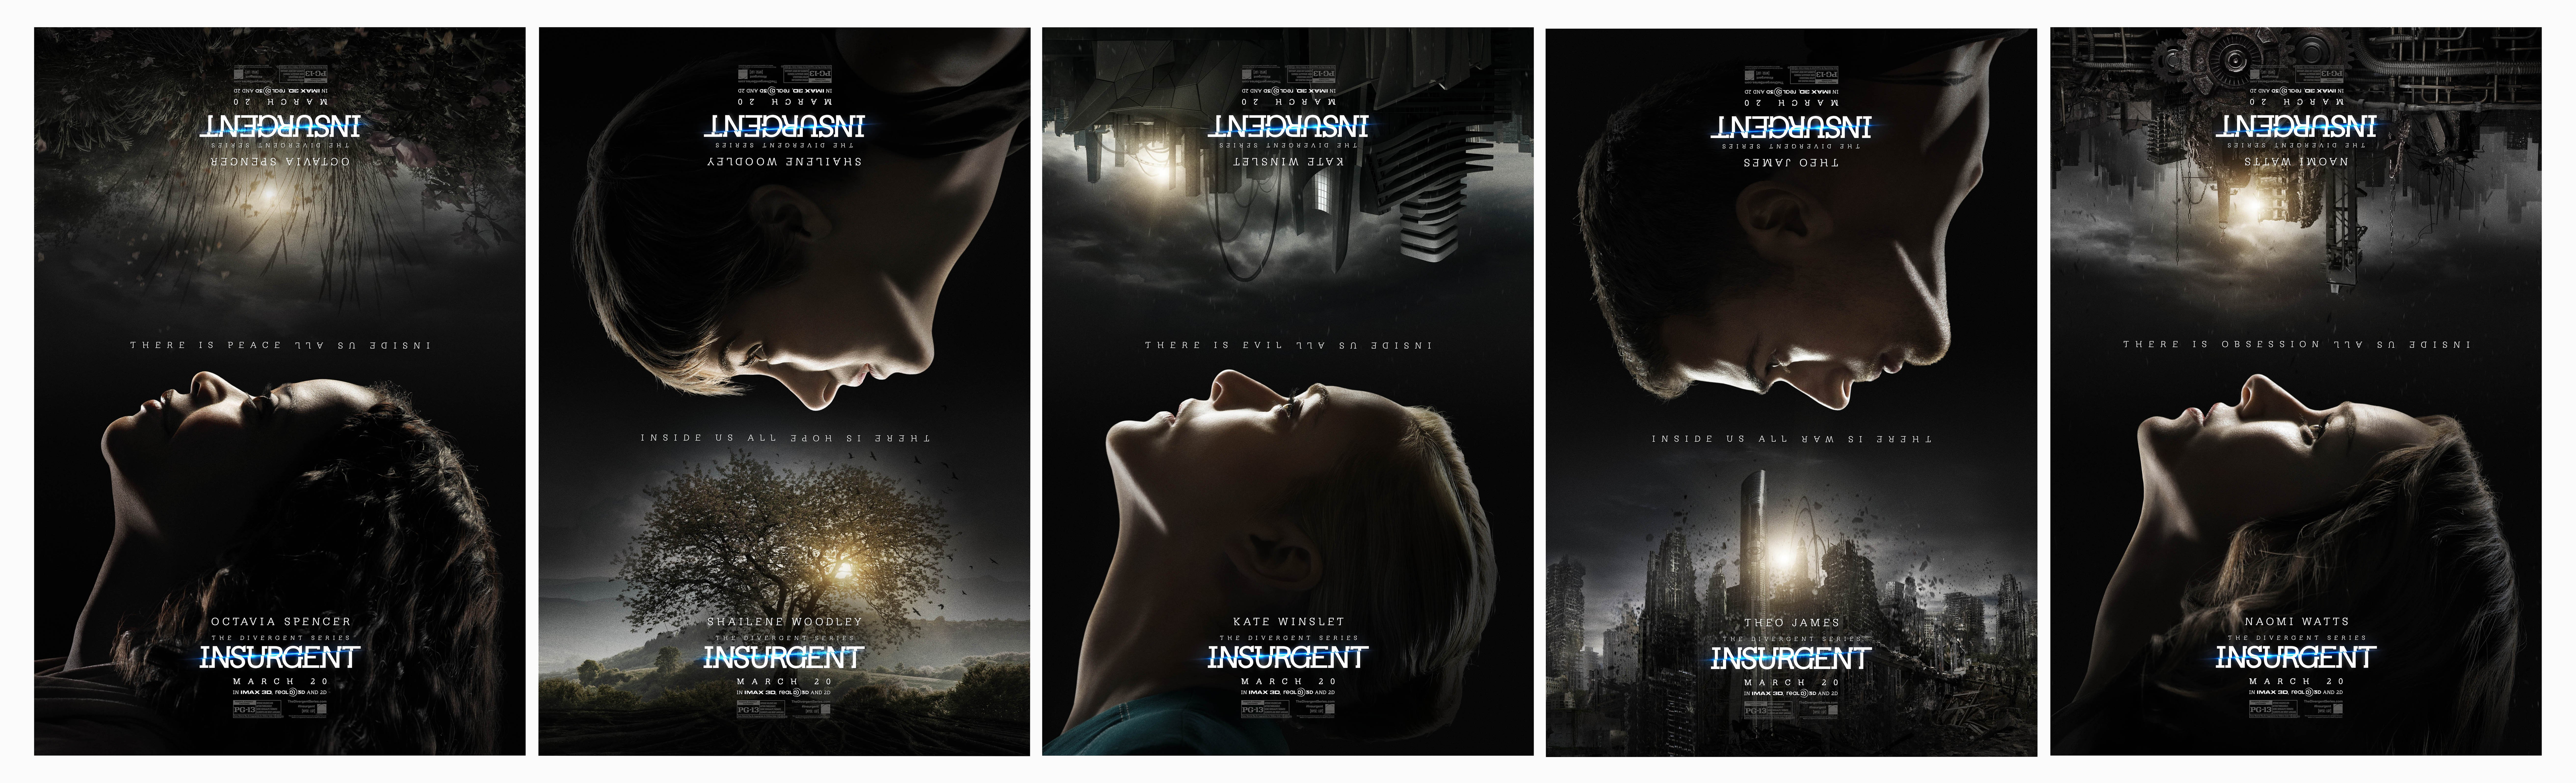 insurgent, Sci fi, Adventure, Action, Divergent, Series, 1insurgent, Poster Wallpaper